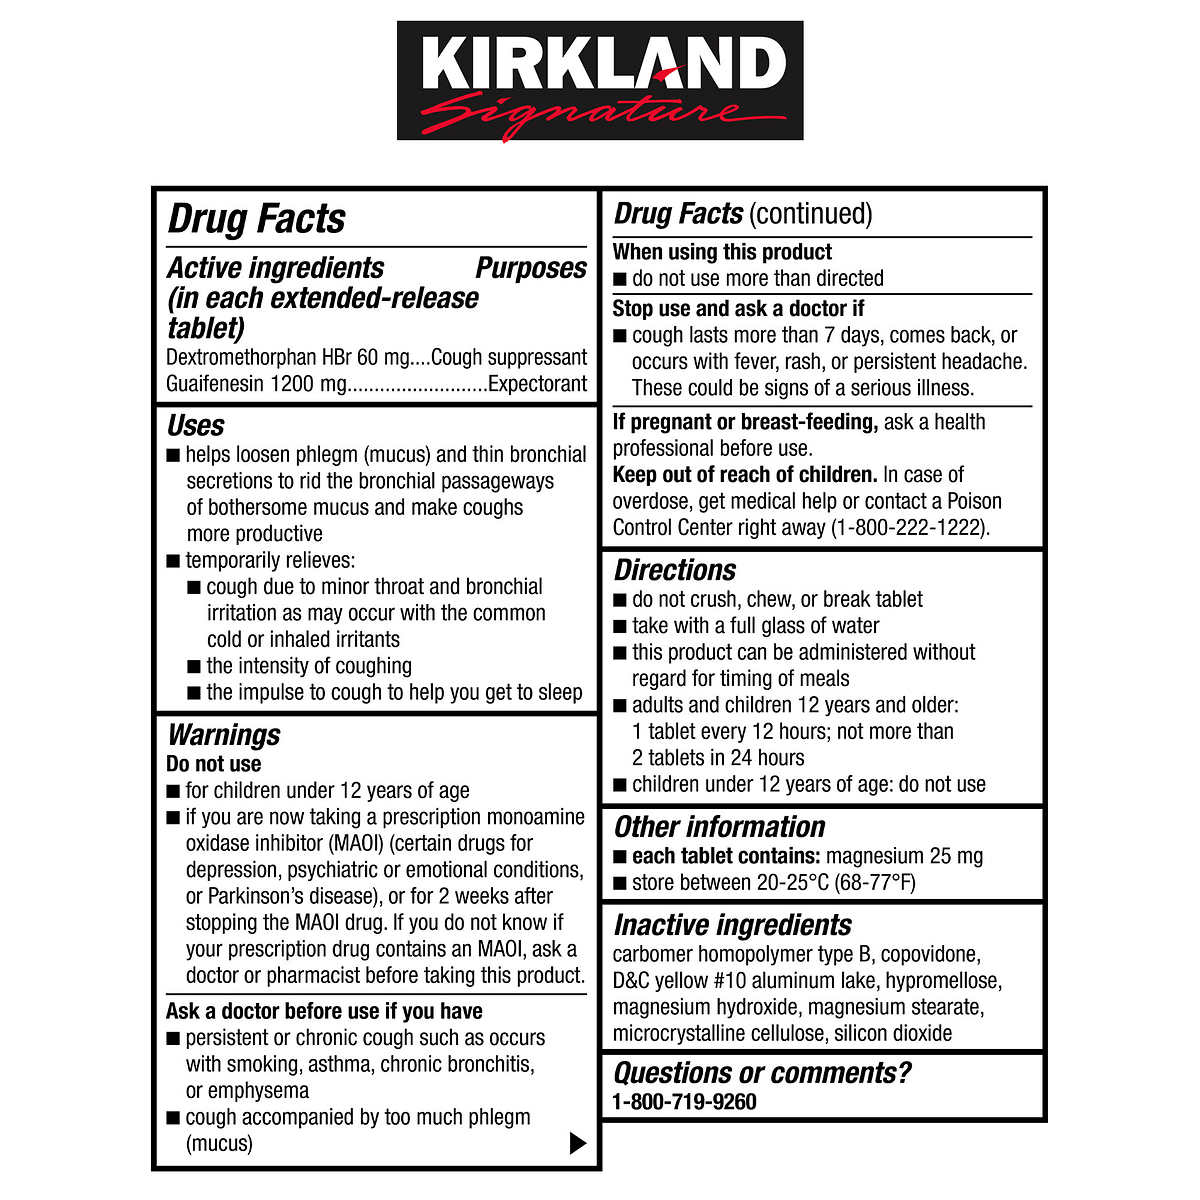 Kirkland Signature Mucus DM Maximum Strength, 84 Tablets